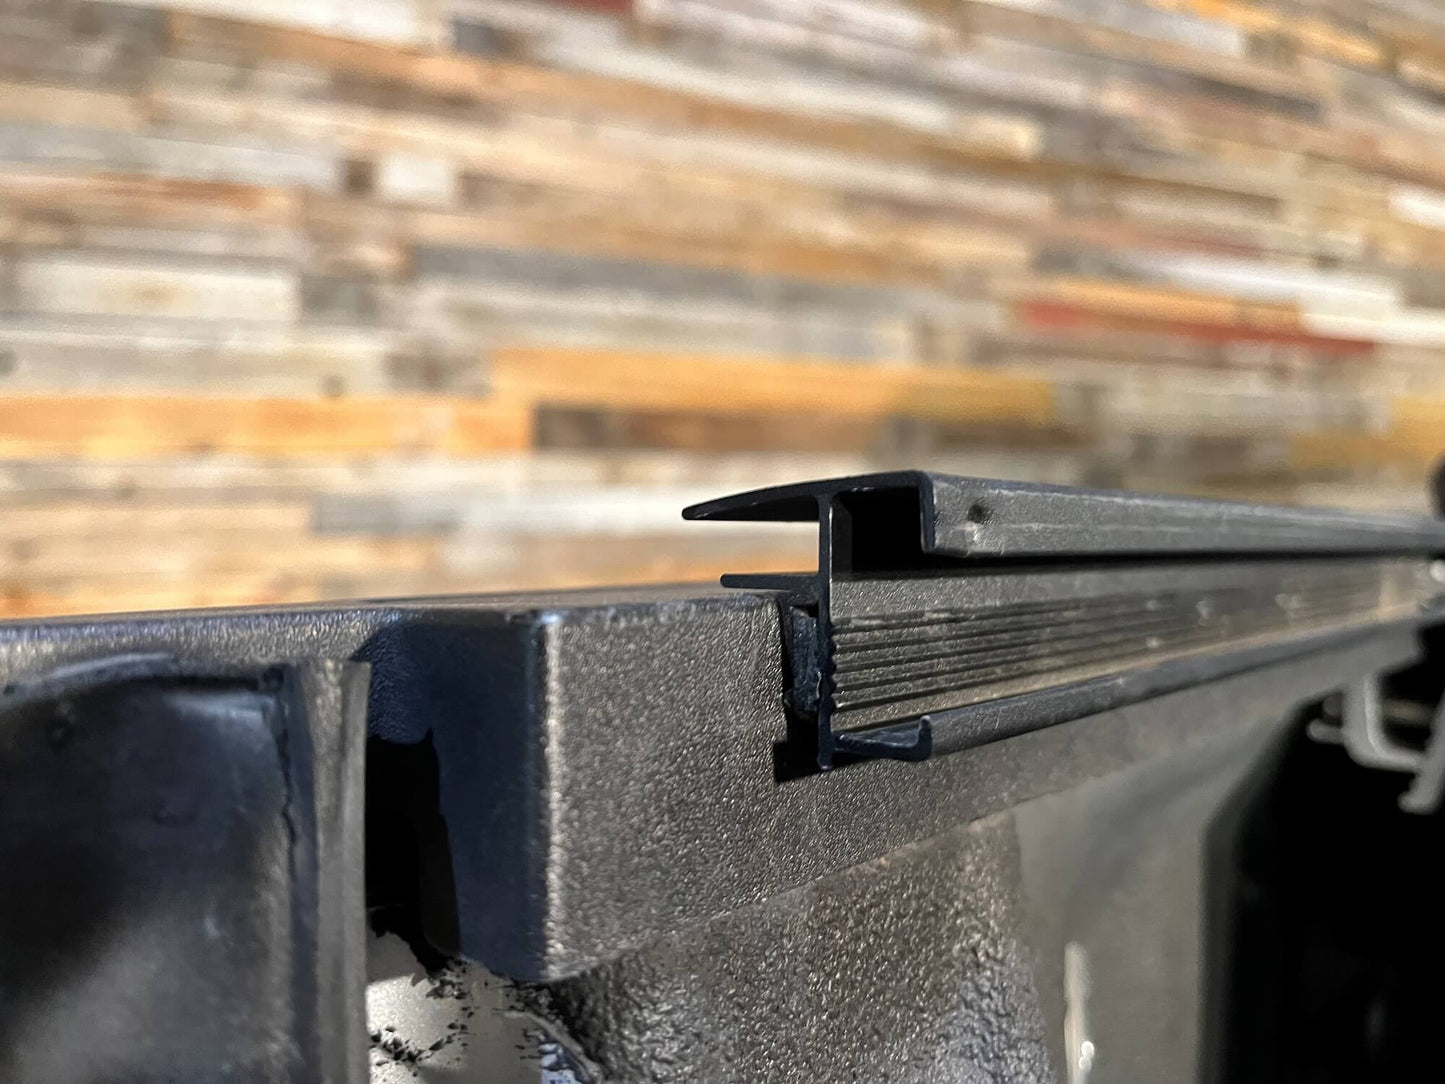 Sawtooth Stretch tonneau black aluminum side rails installed on Toyota Tacoma pickup truck bed rails